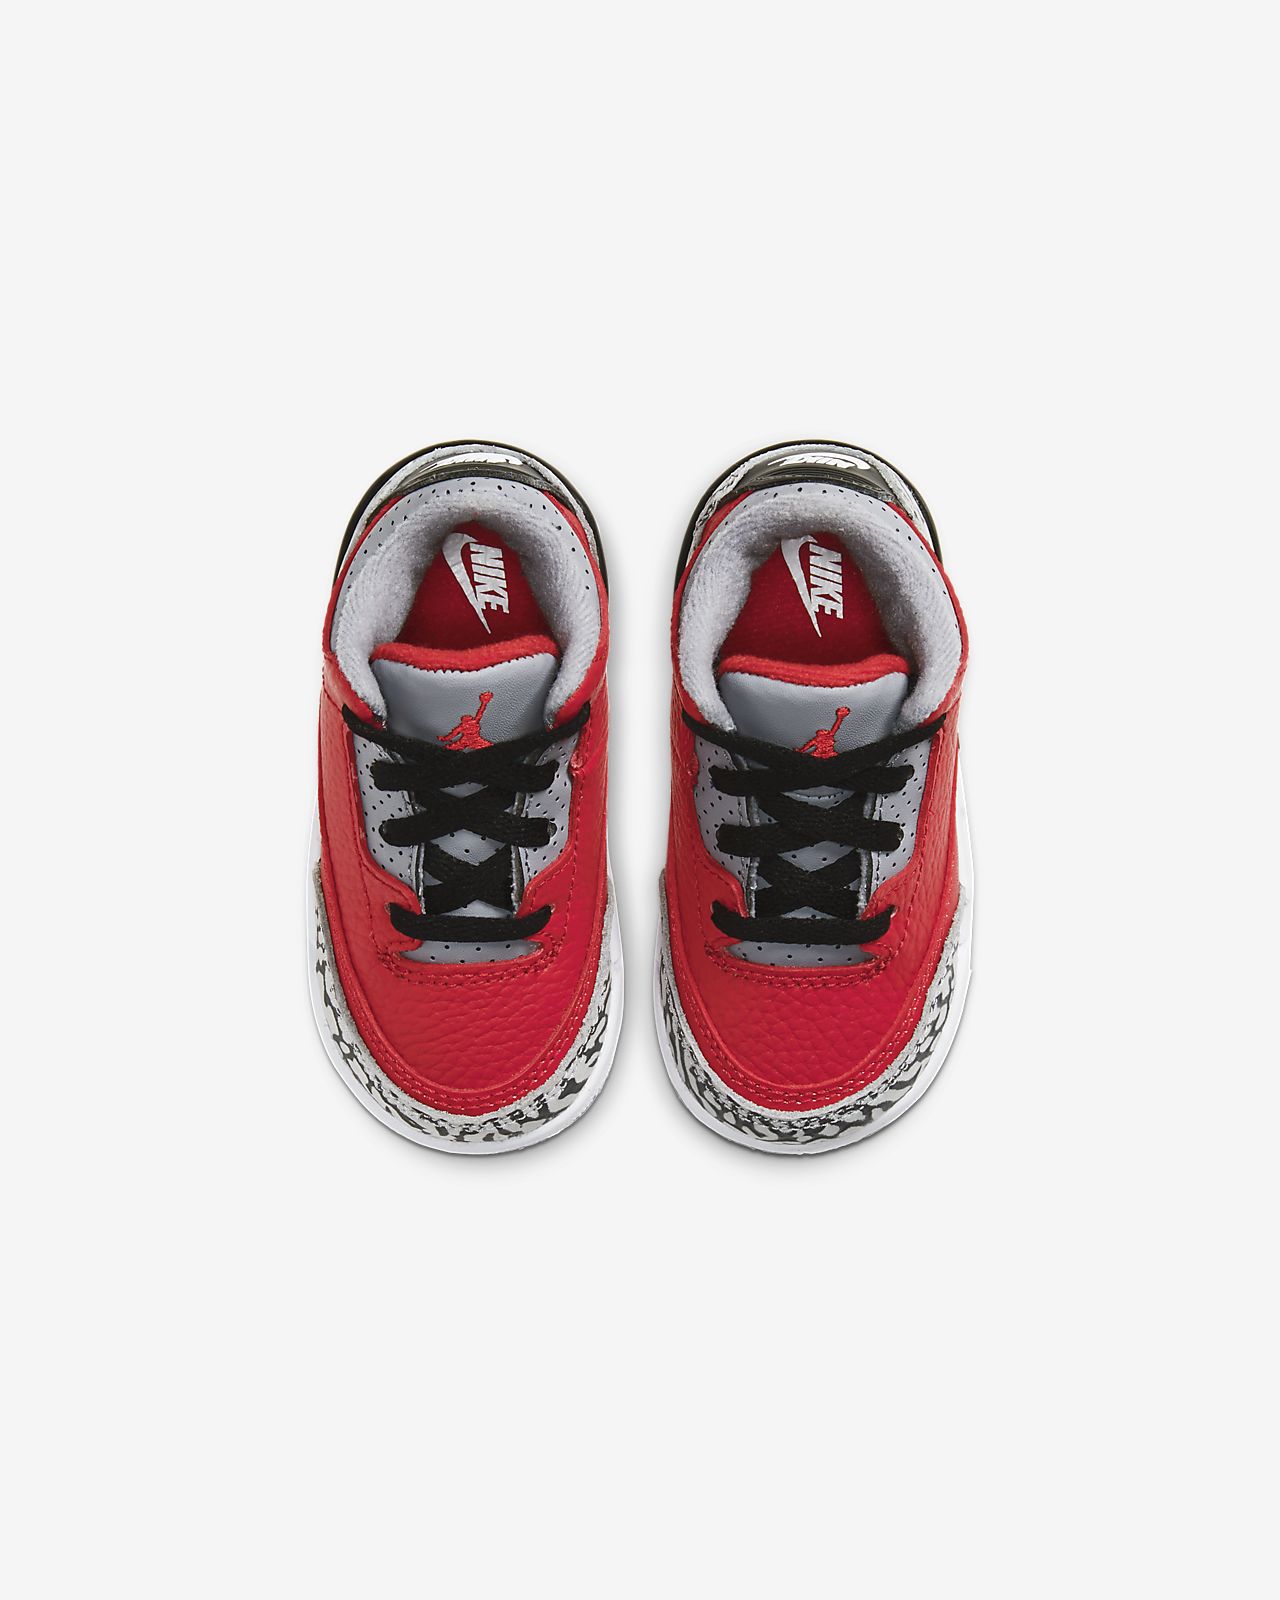 Jordan Air Jordan 3 Retro Se Fire Redfire Red Cement Grey